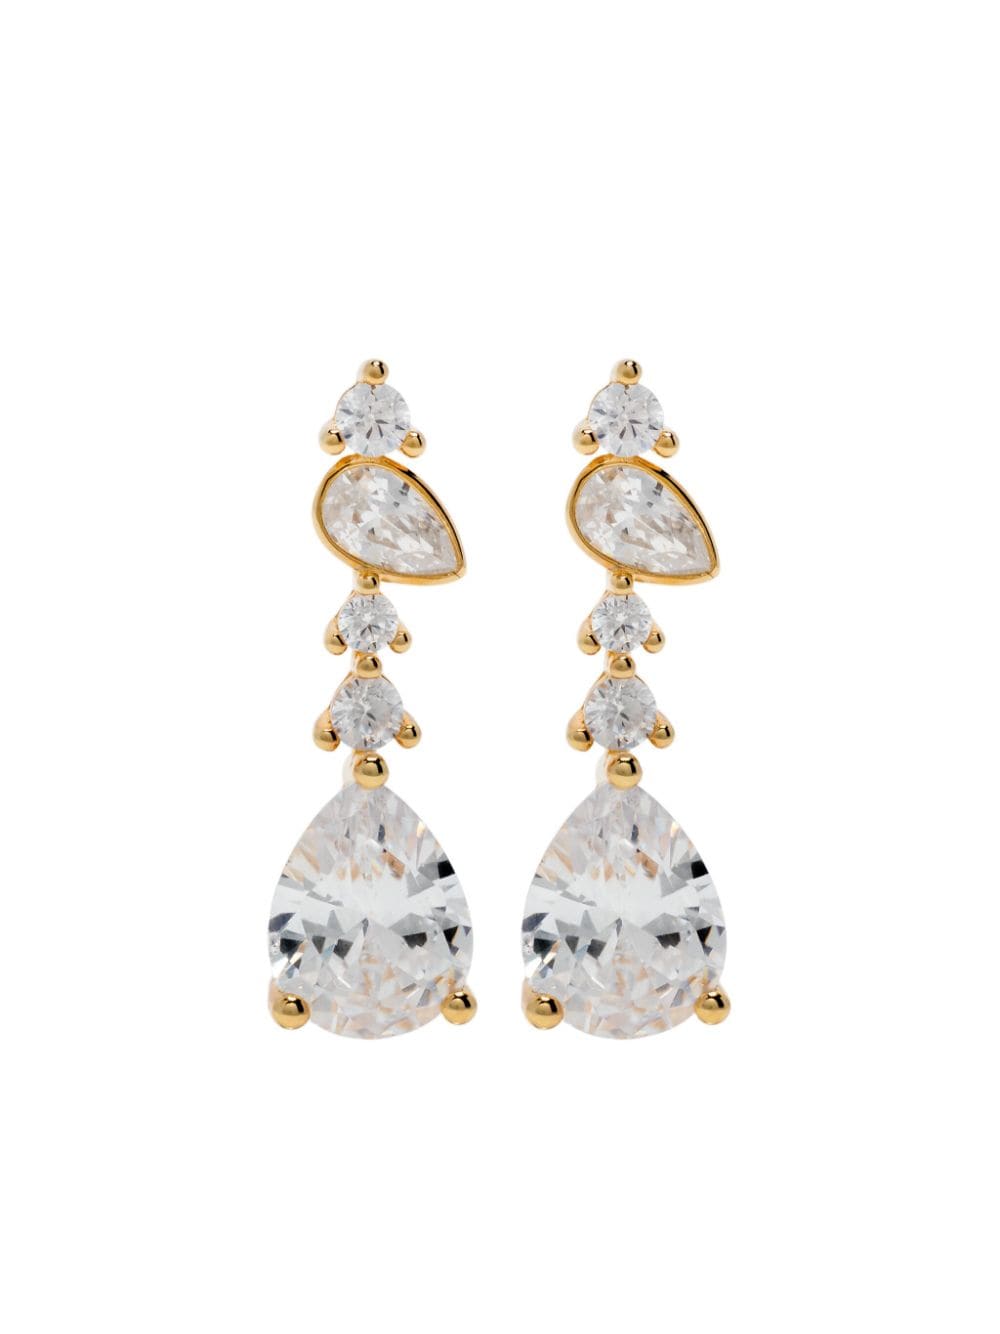 Fandangle embellished earrings